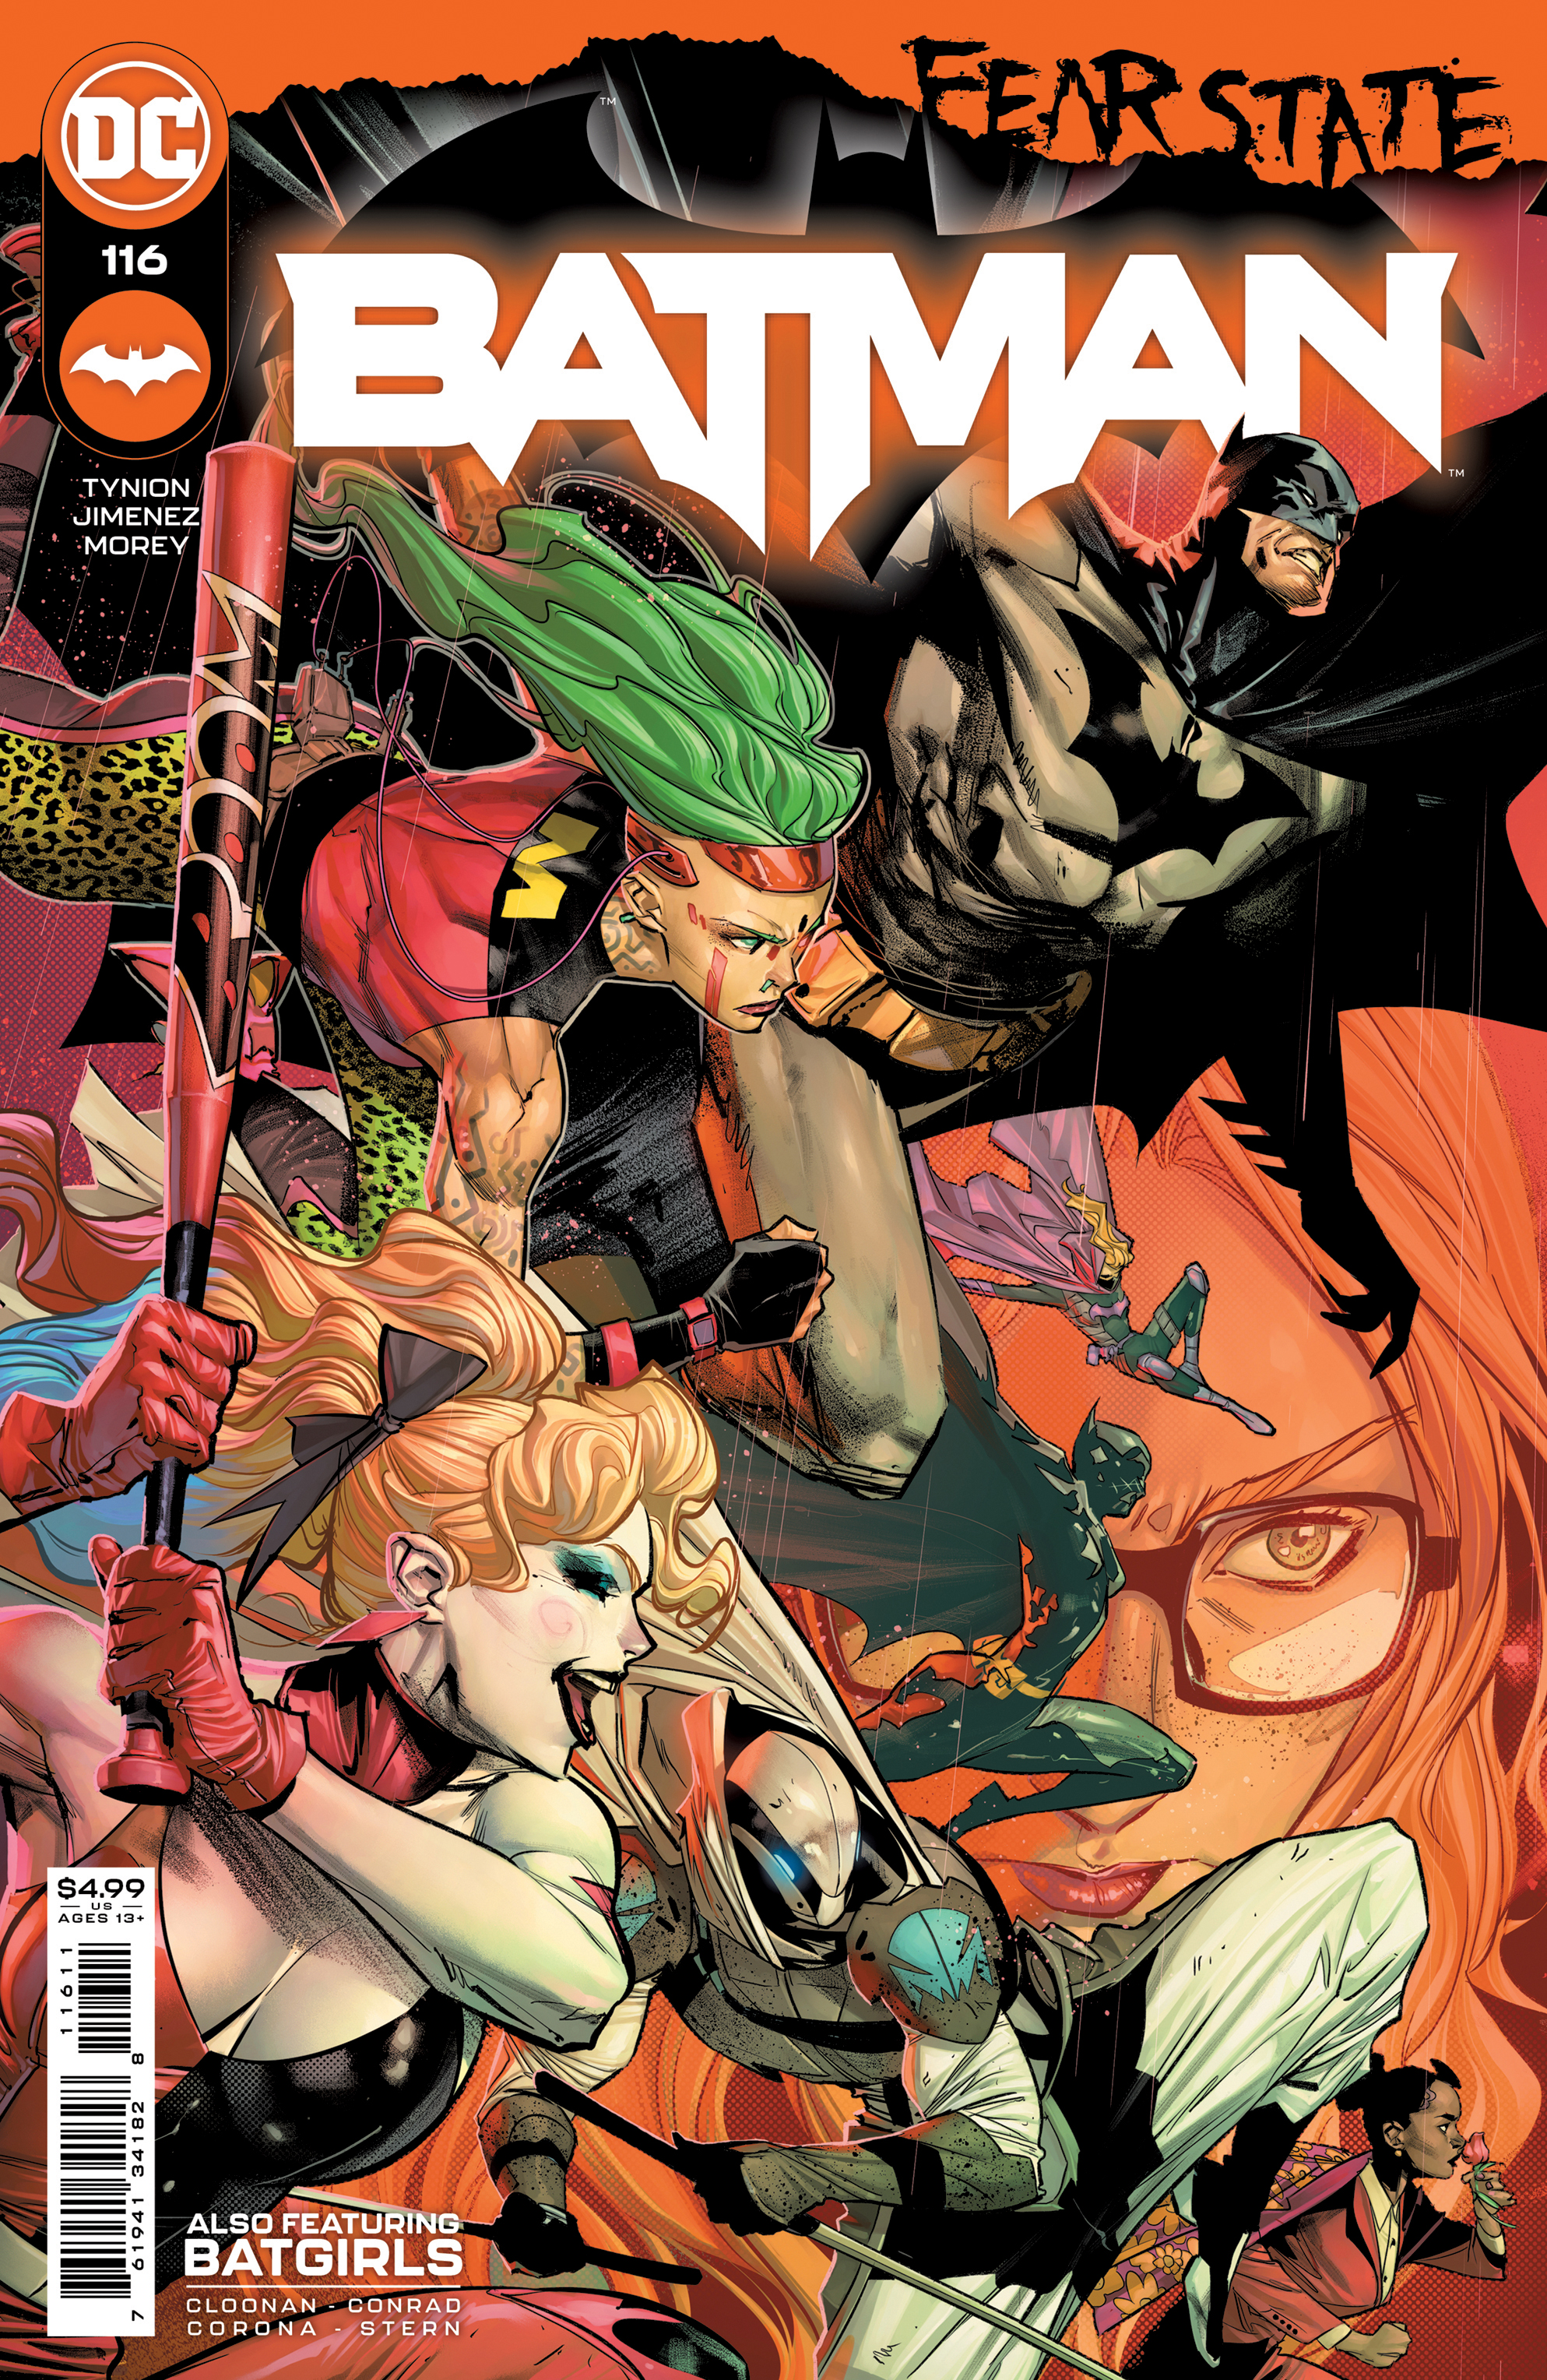 Batman #116 Cover A Jorge Jimenez (Fear State) (2016)